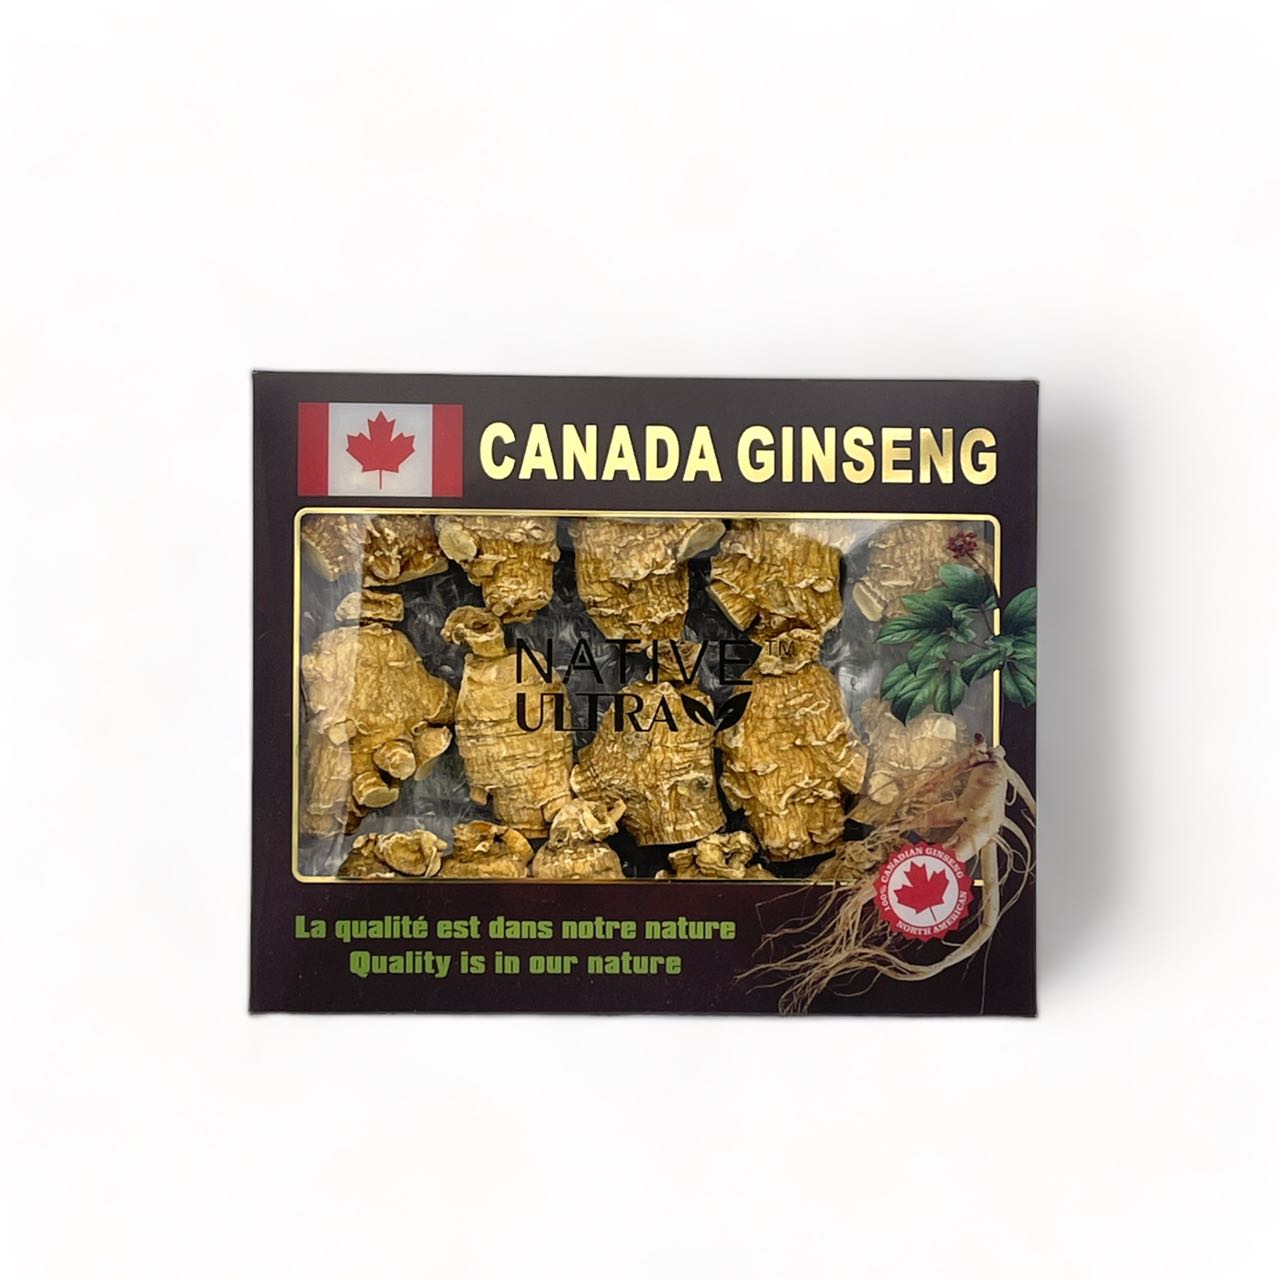 "NATIVE ULTRA"  Canadian Ginseng (10g/piece), 150g/box